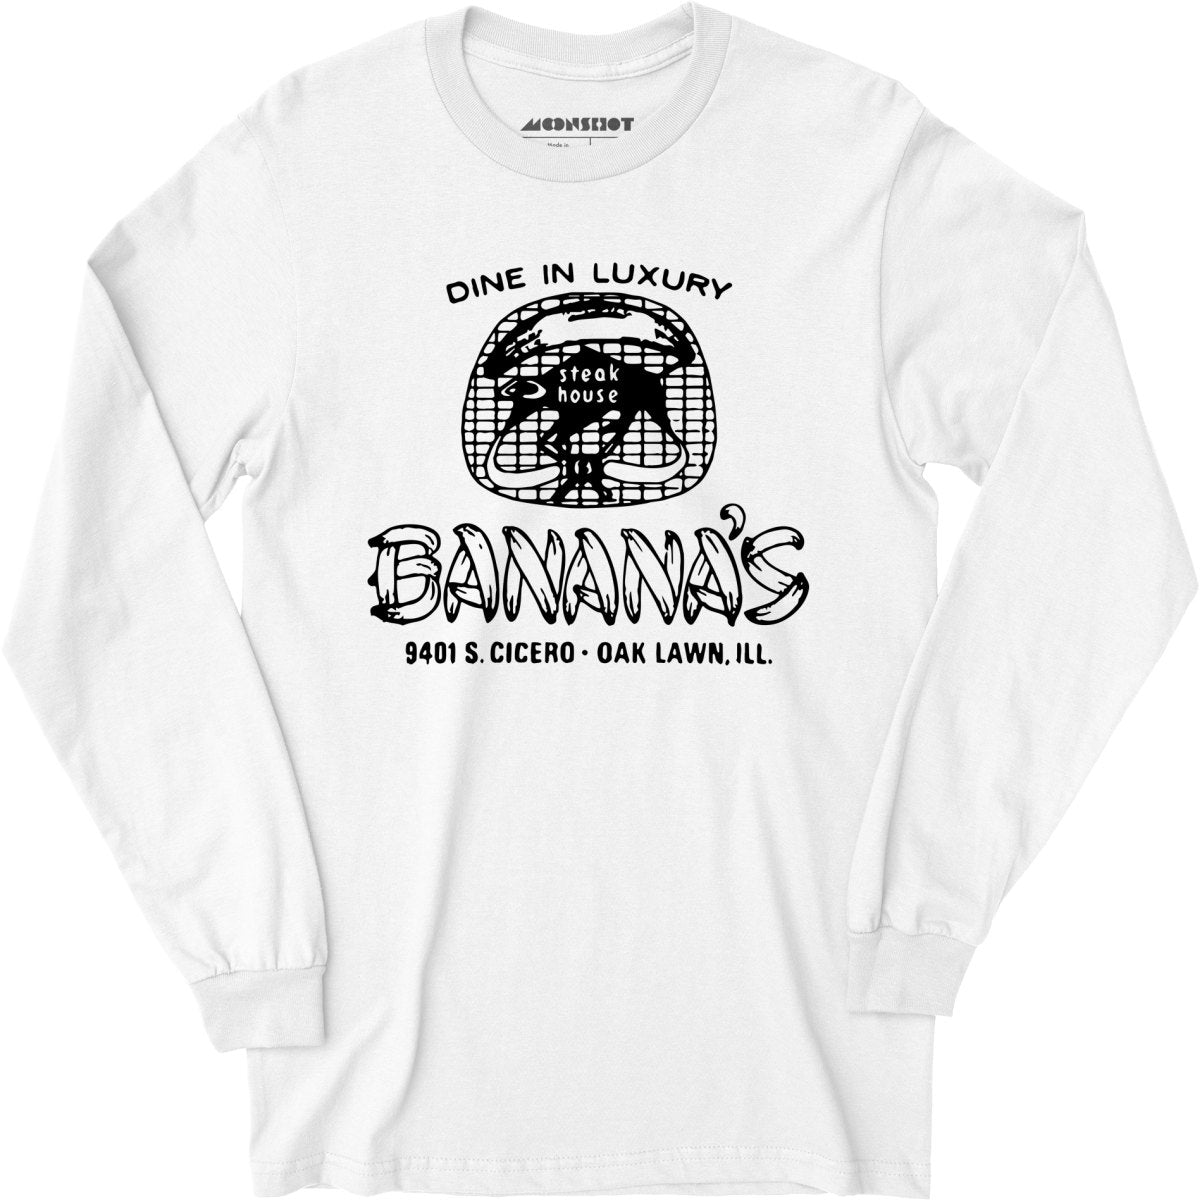 Banana's Steak House v2 - Oak Lawn, IL - Vintage Restaurant - Long Sleeve T-Shirt